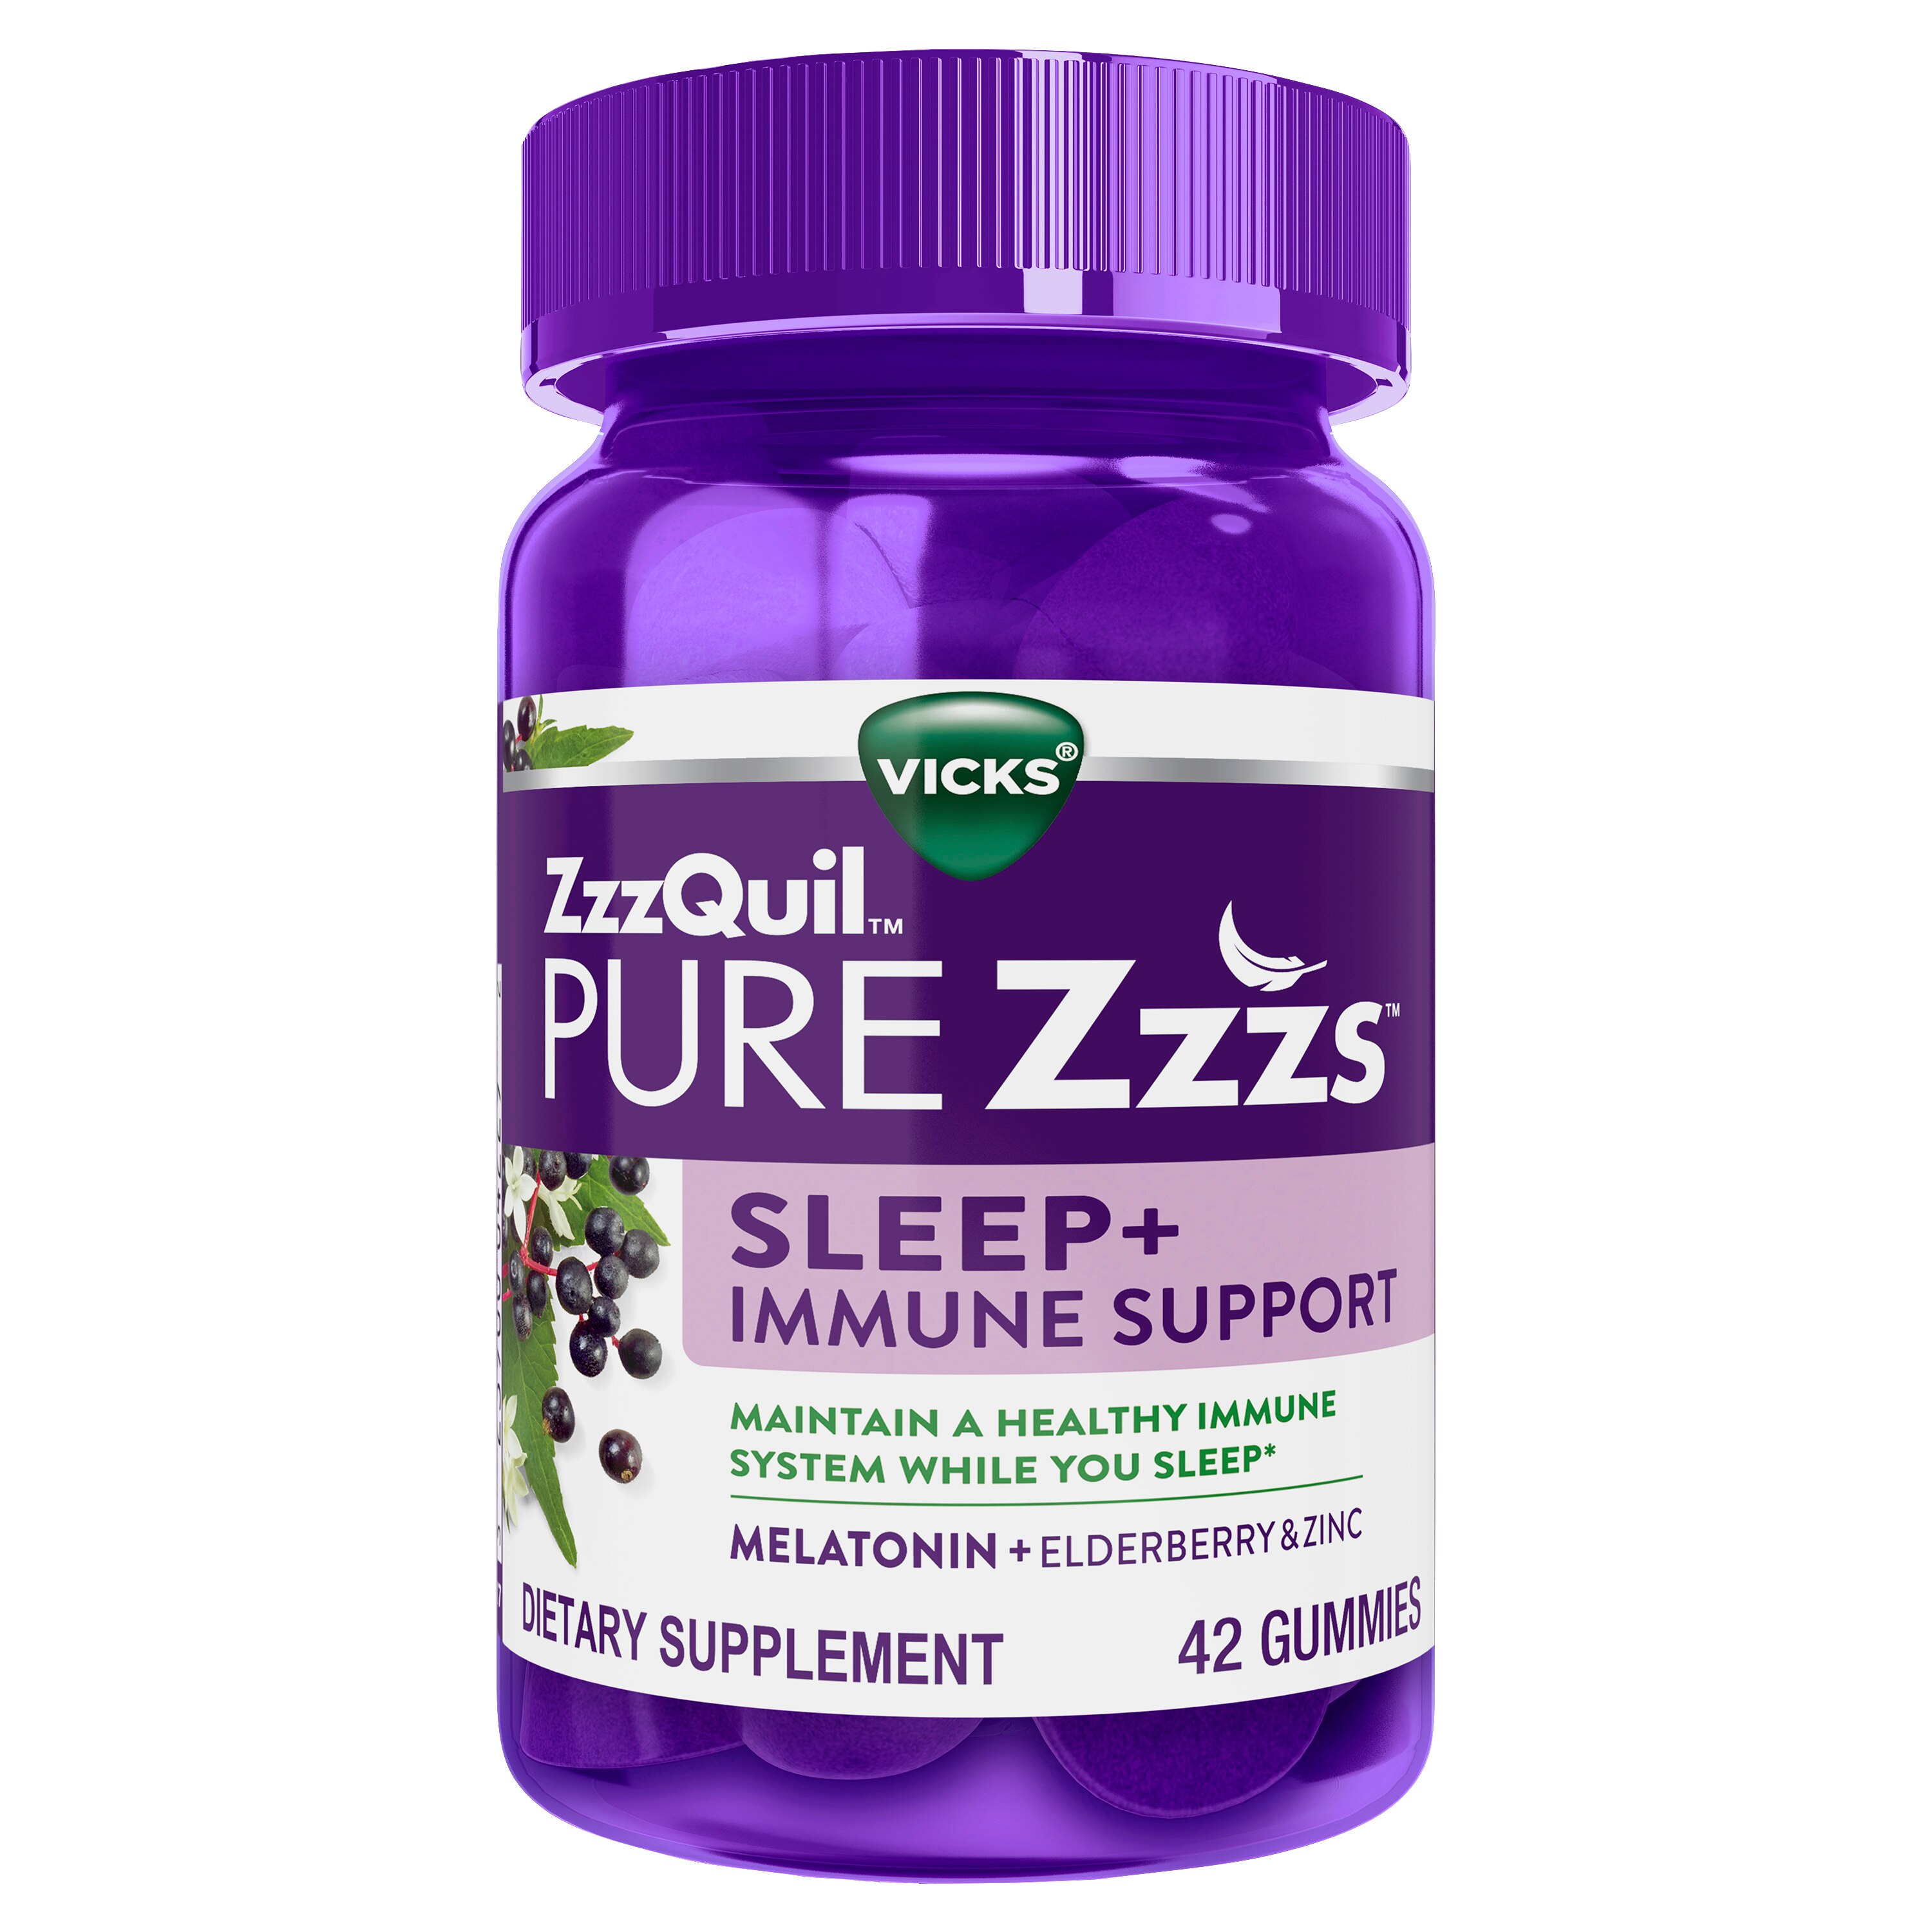 Pure Zzzs Sleep + Immune Support Gummies